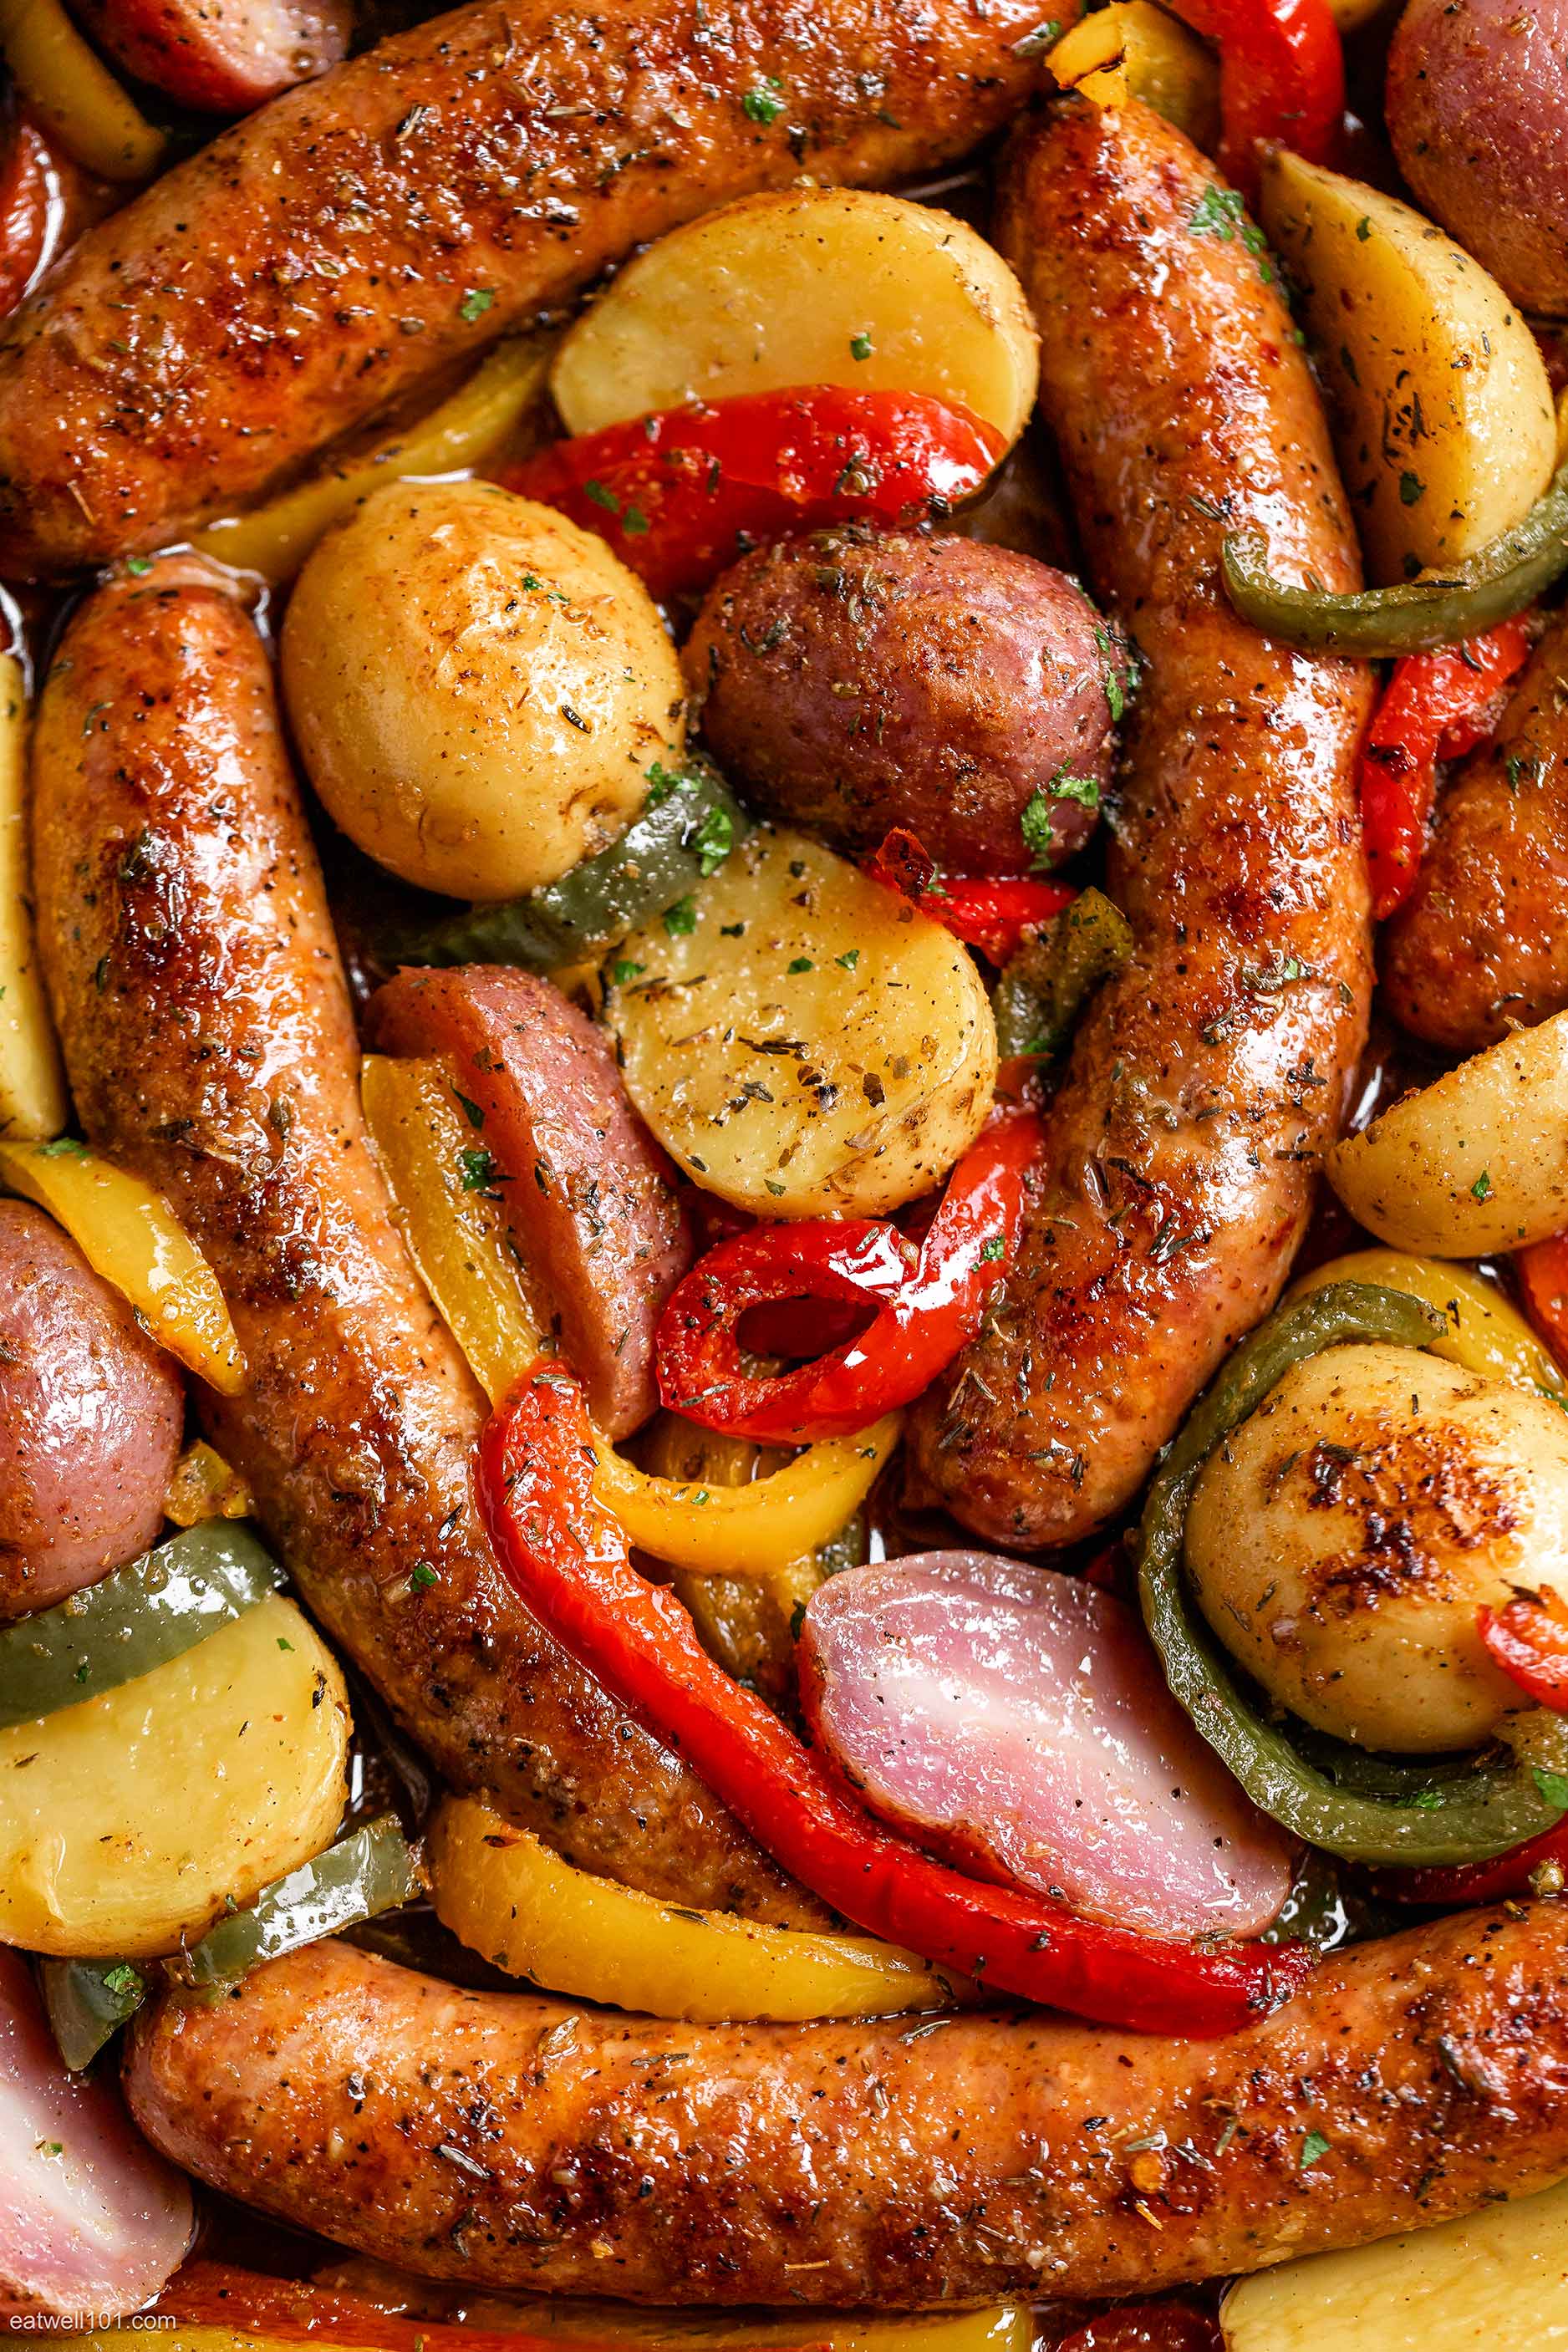 https://www.eatwell101.com/wp-content/uploads/2021/10/baked-sheet-pan-sausage-and-veggies-recipe-1.jpg